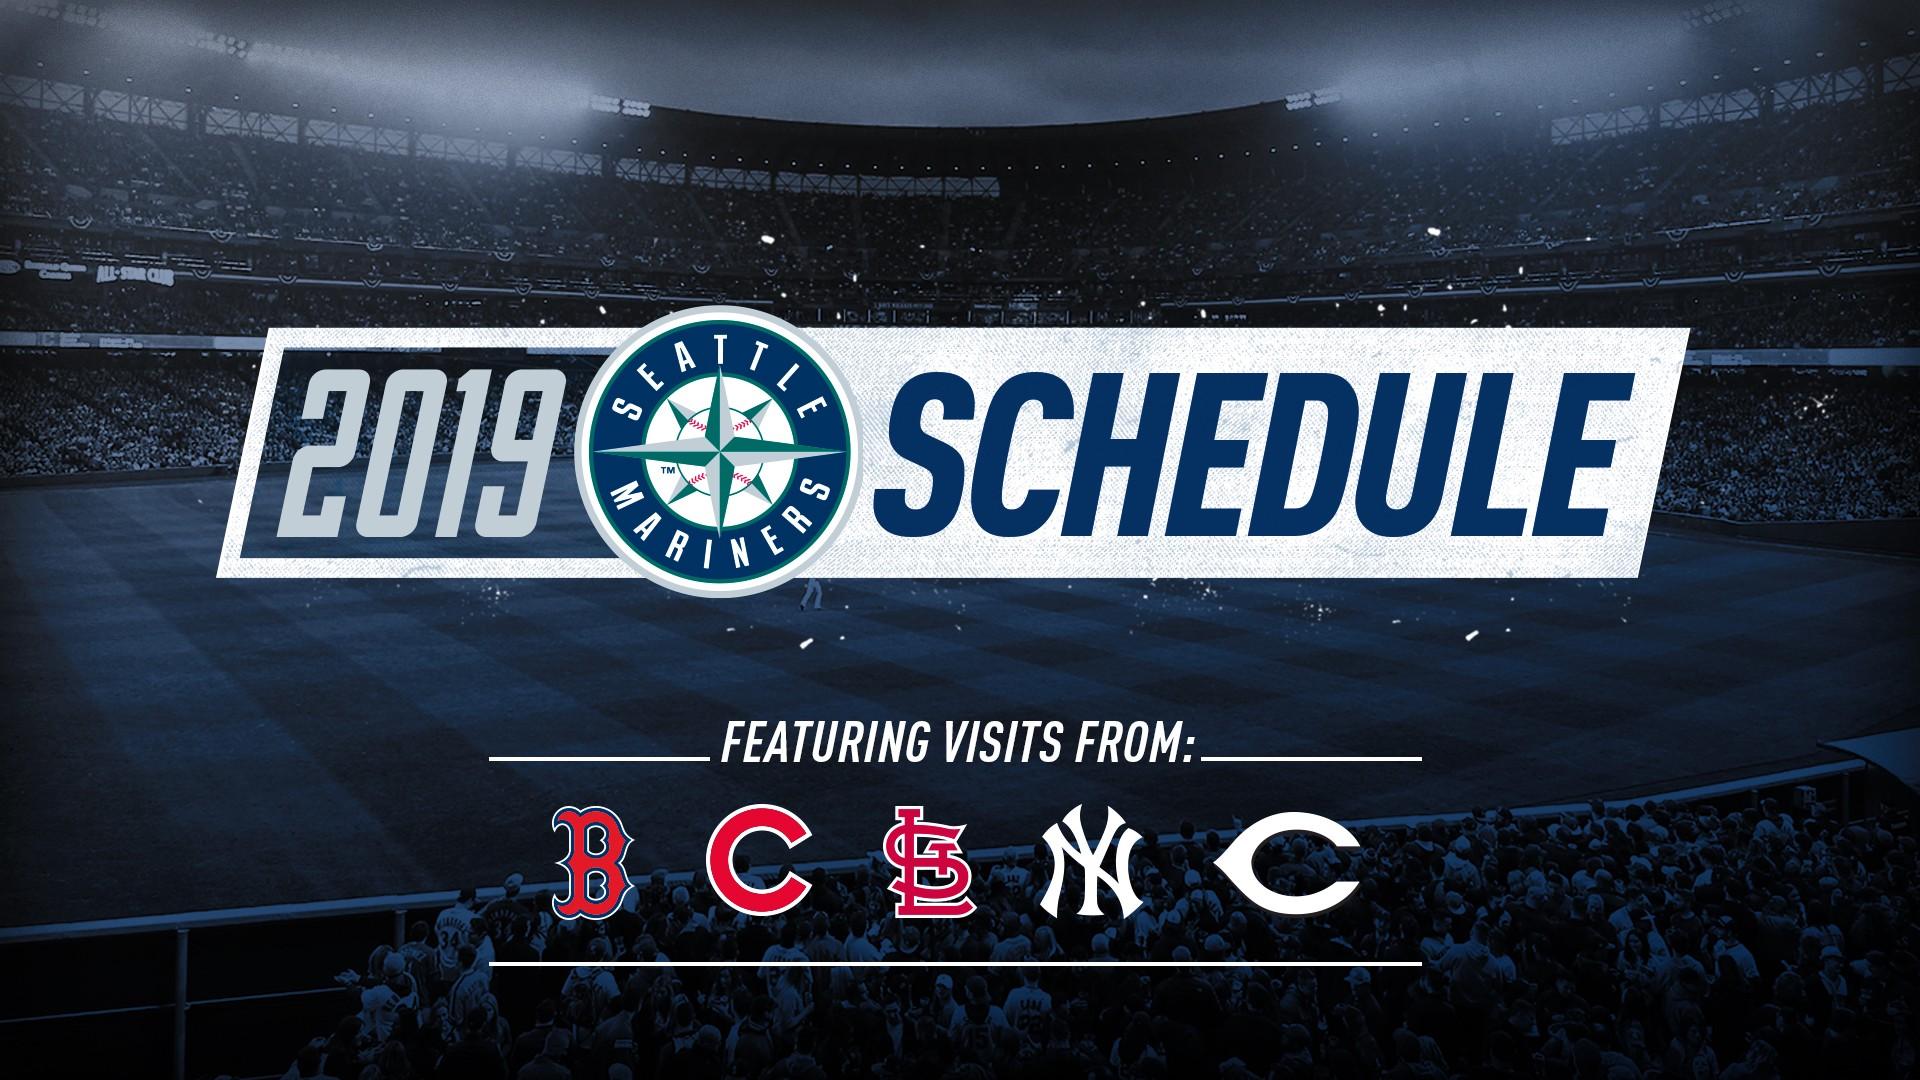 Mariners Announce 2019 Tentative Regular Season Schedule